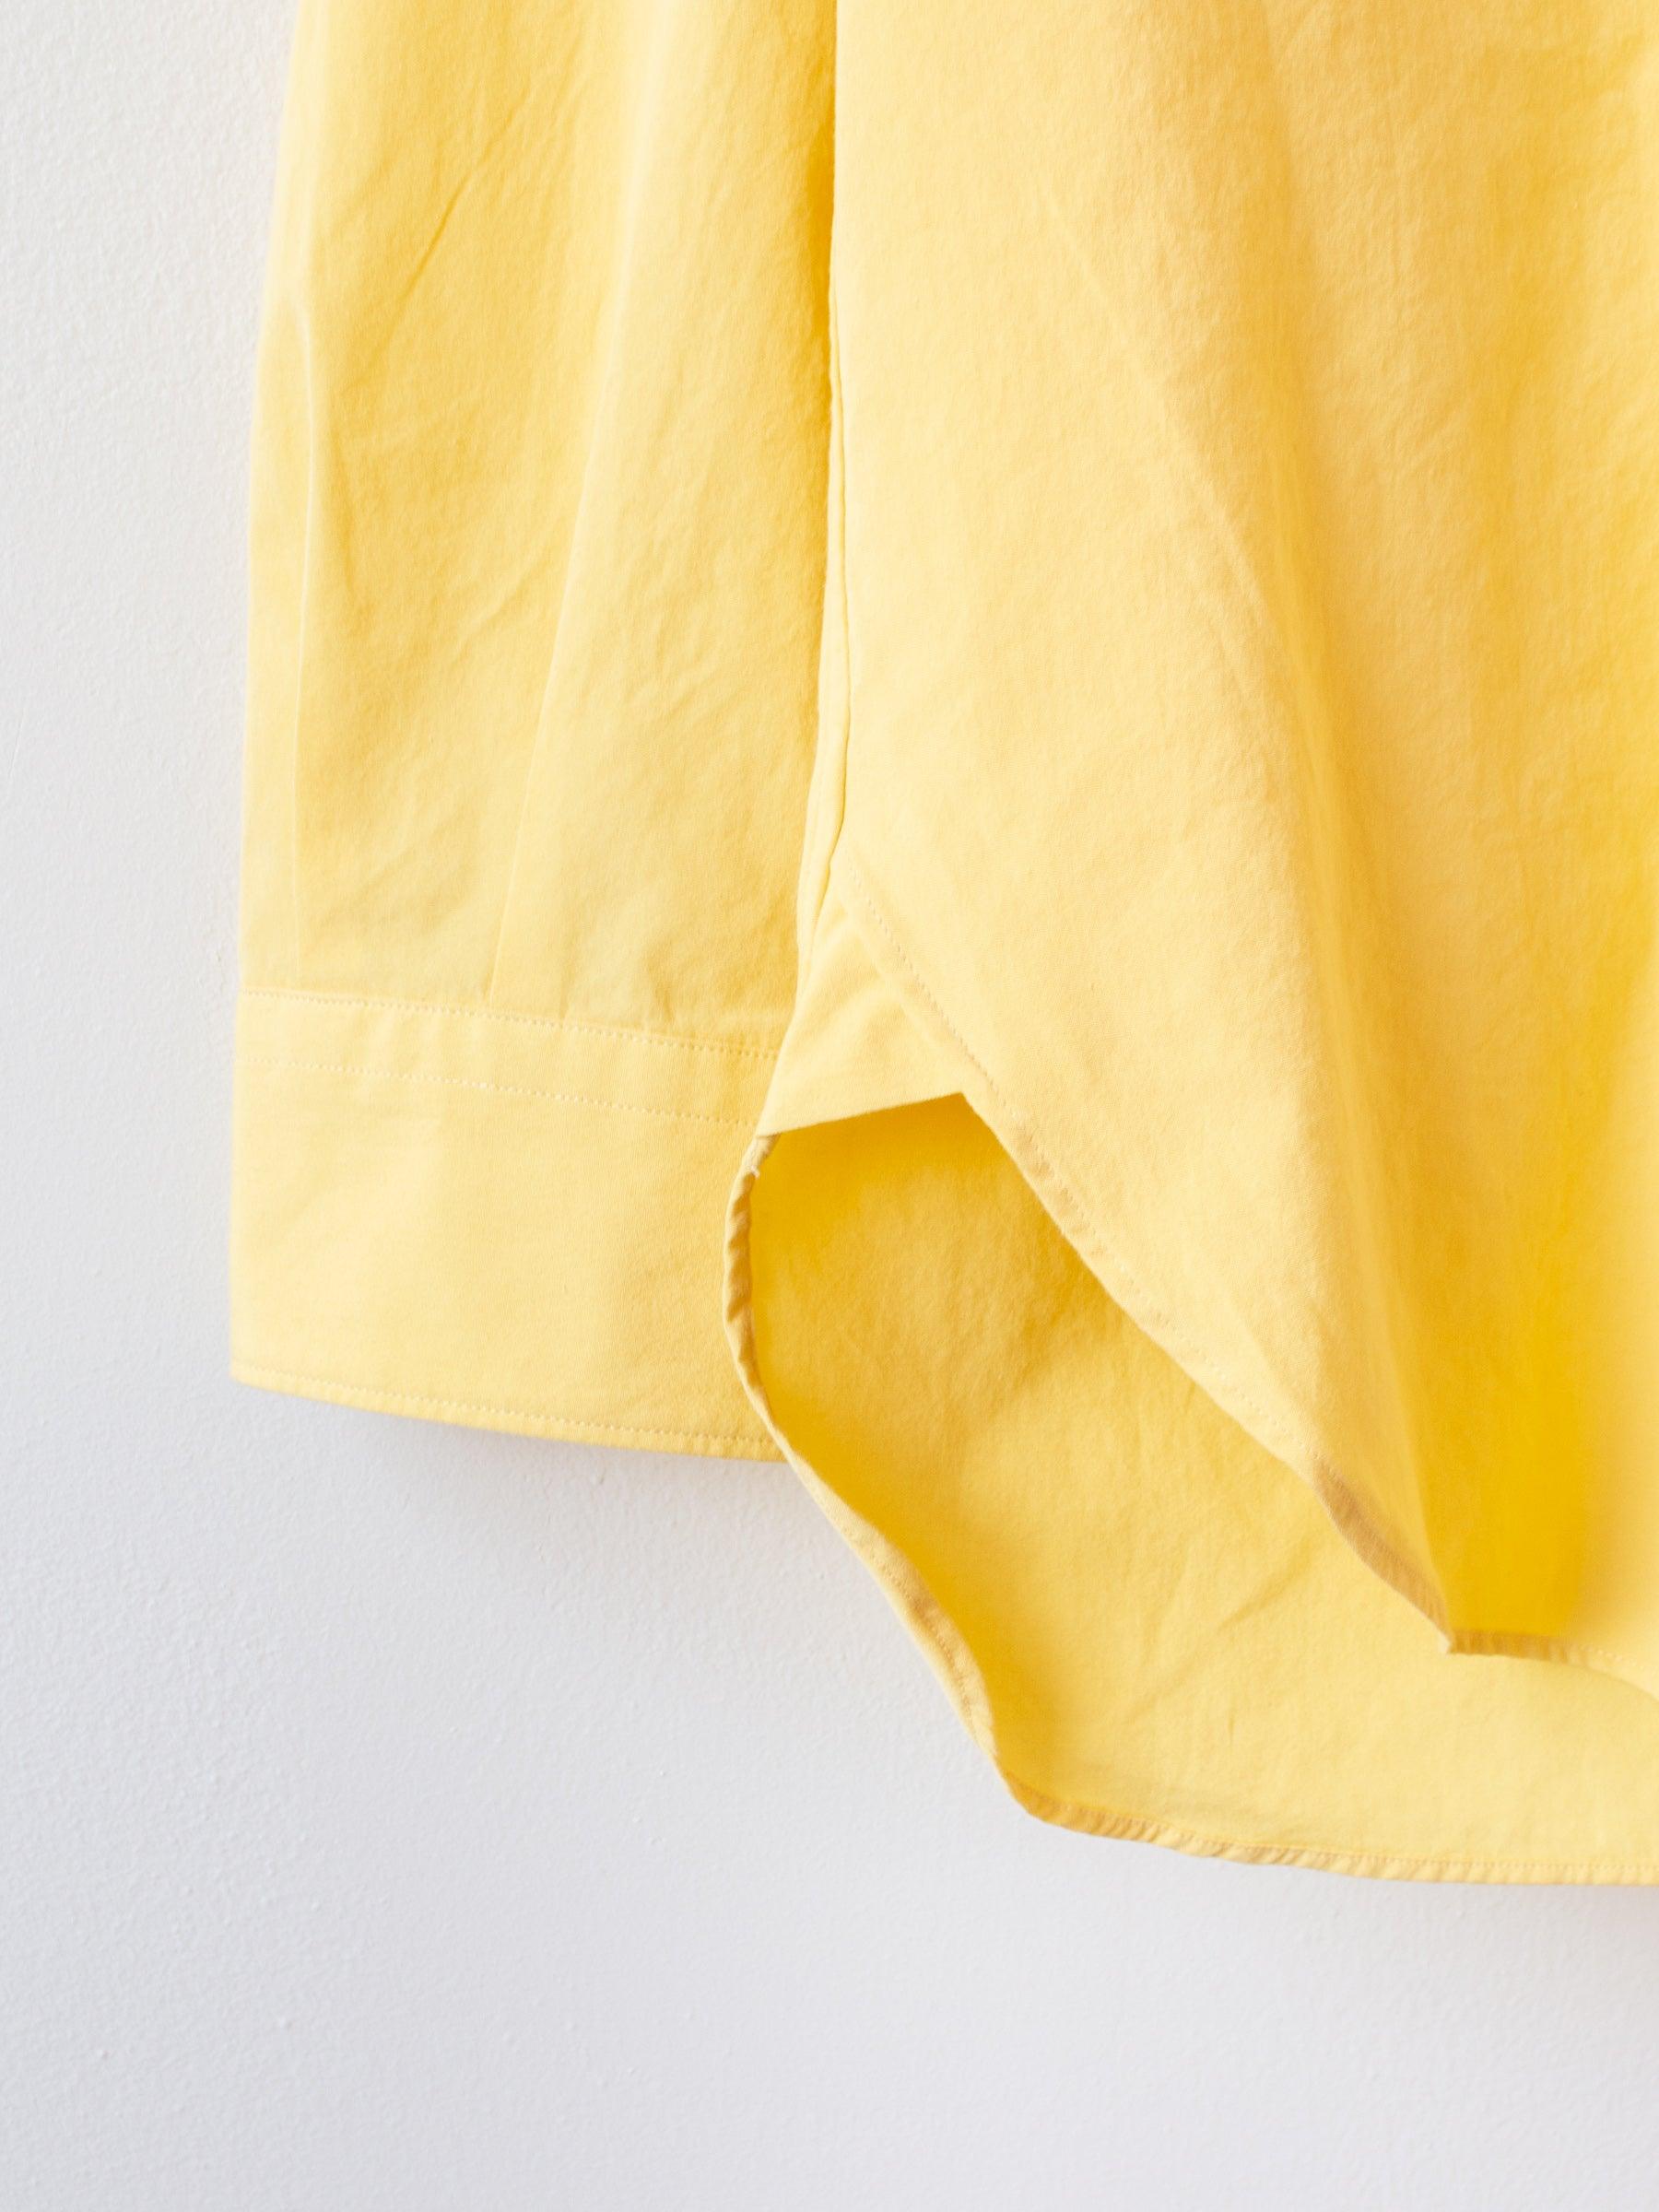 Namu Shop - Phlannel Anonymous Shirt - Yellow